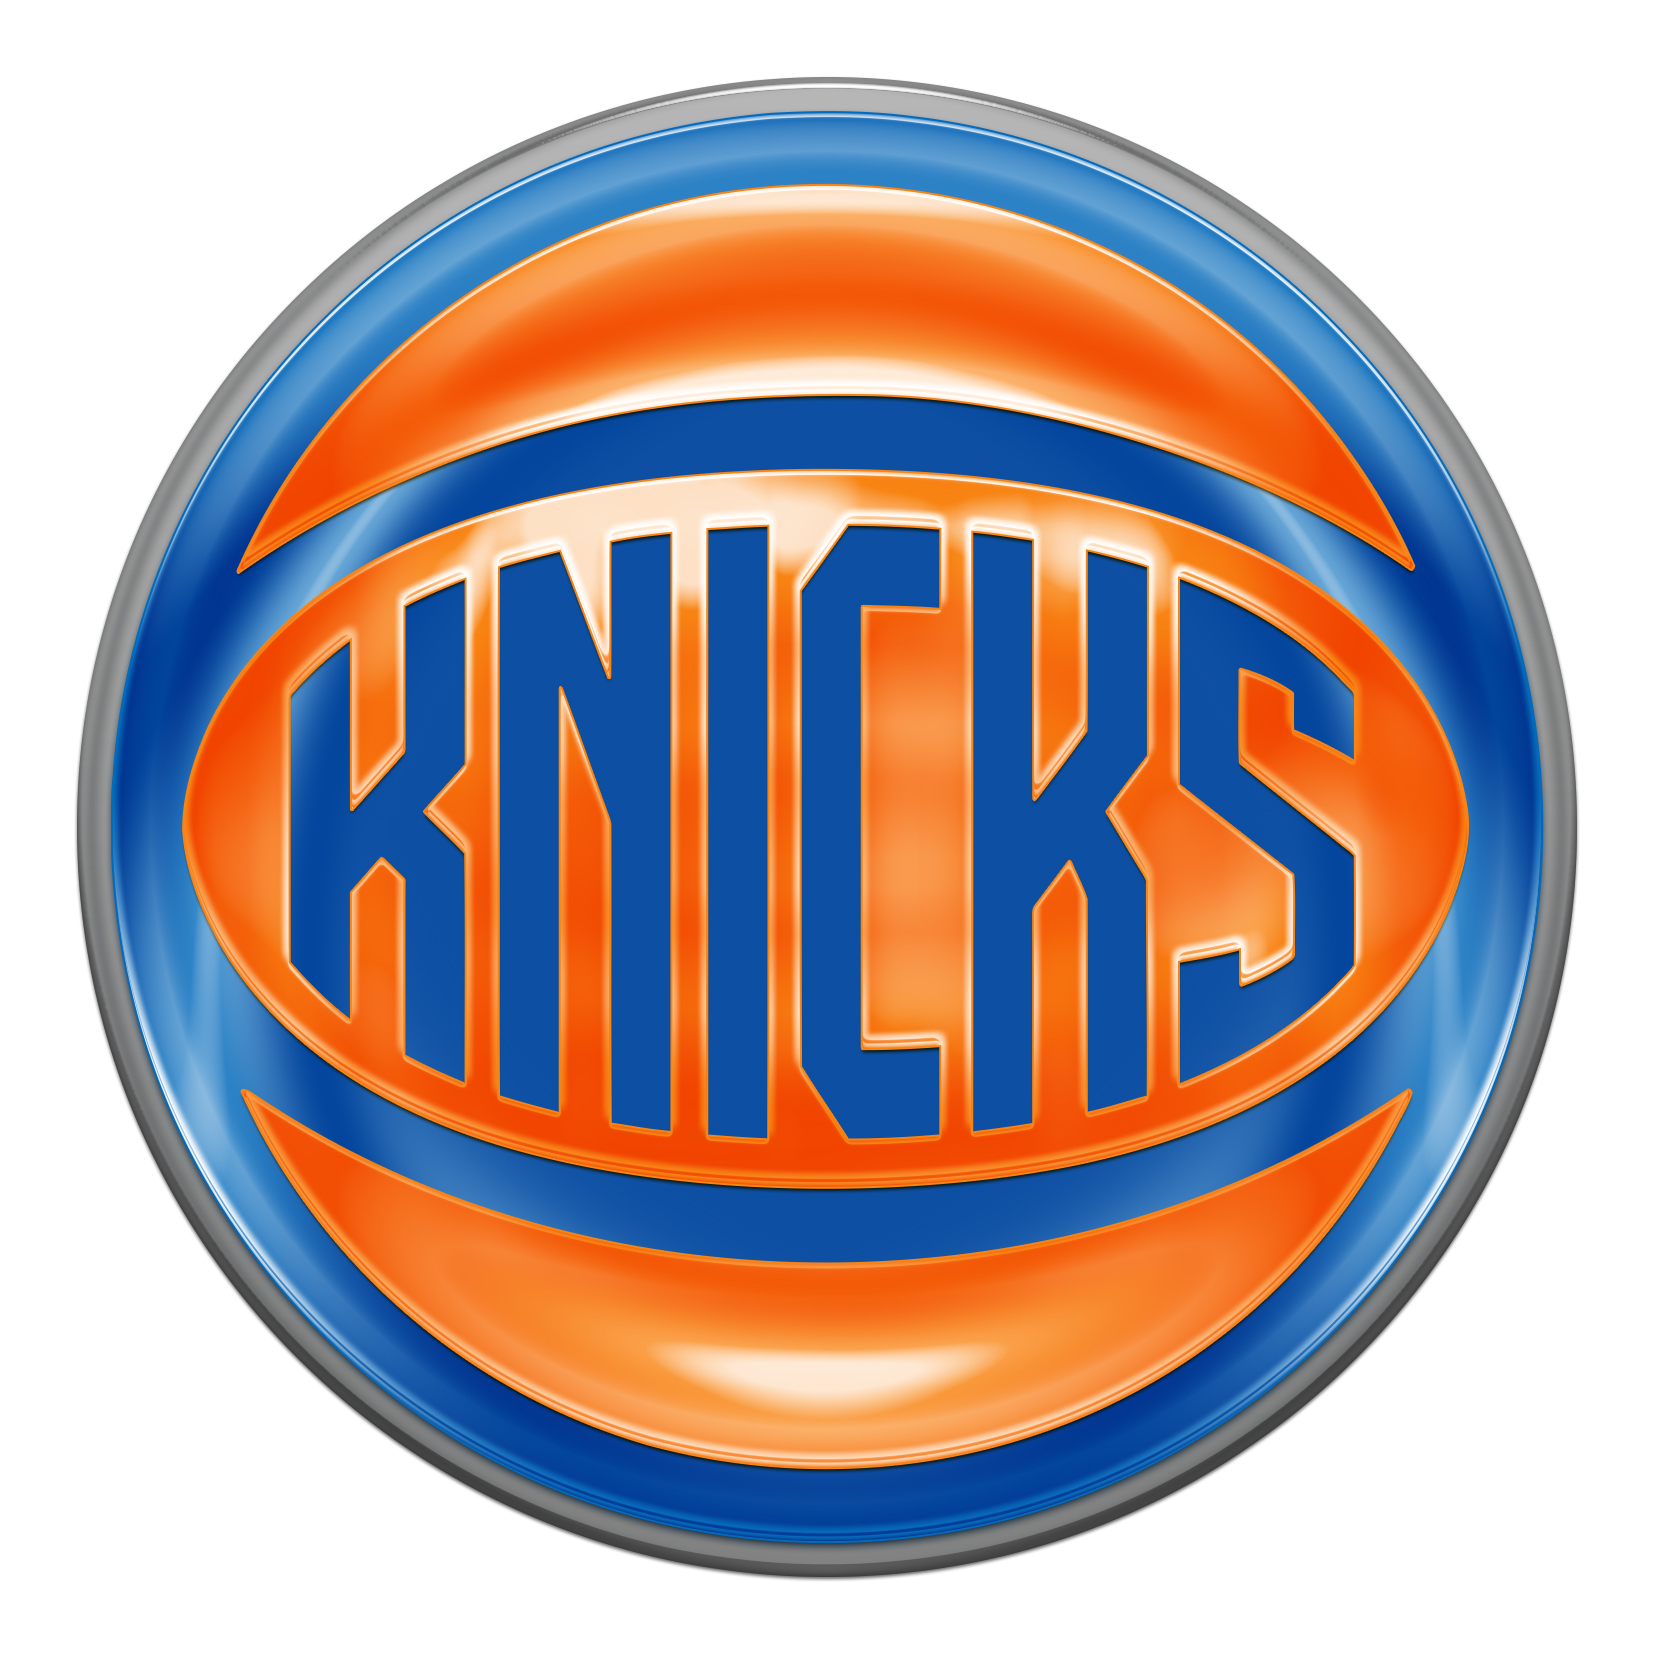 New York Knicks news